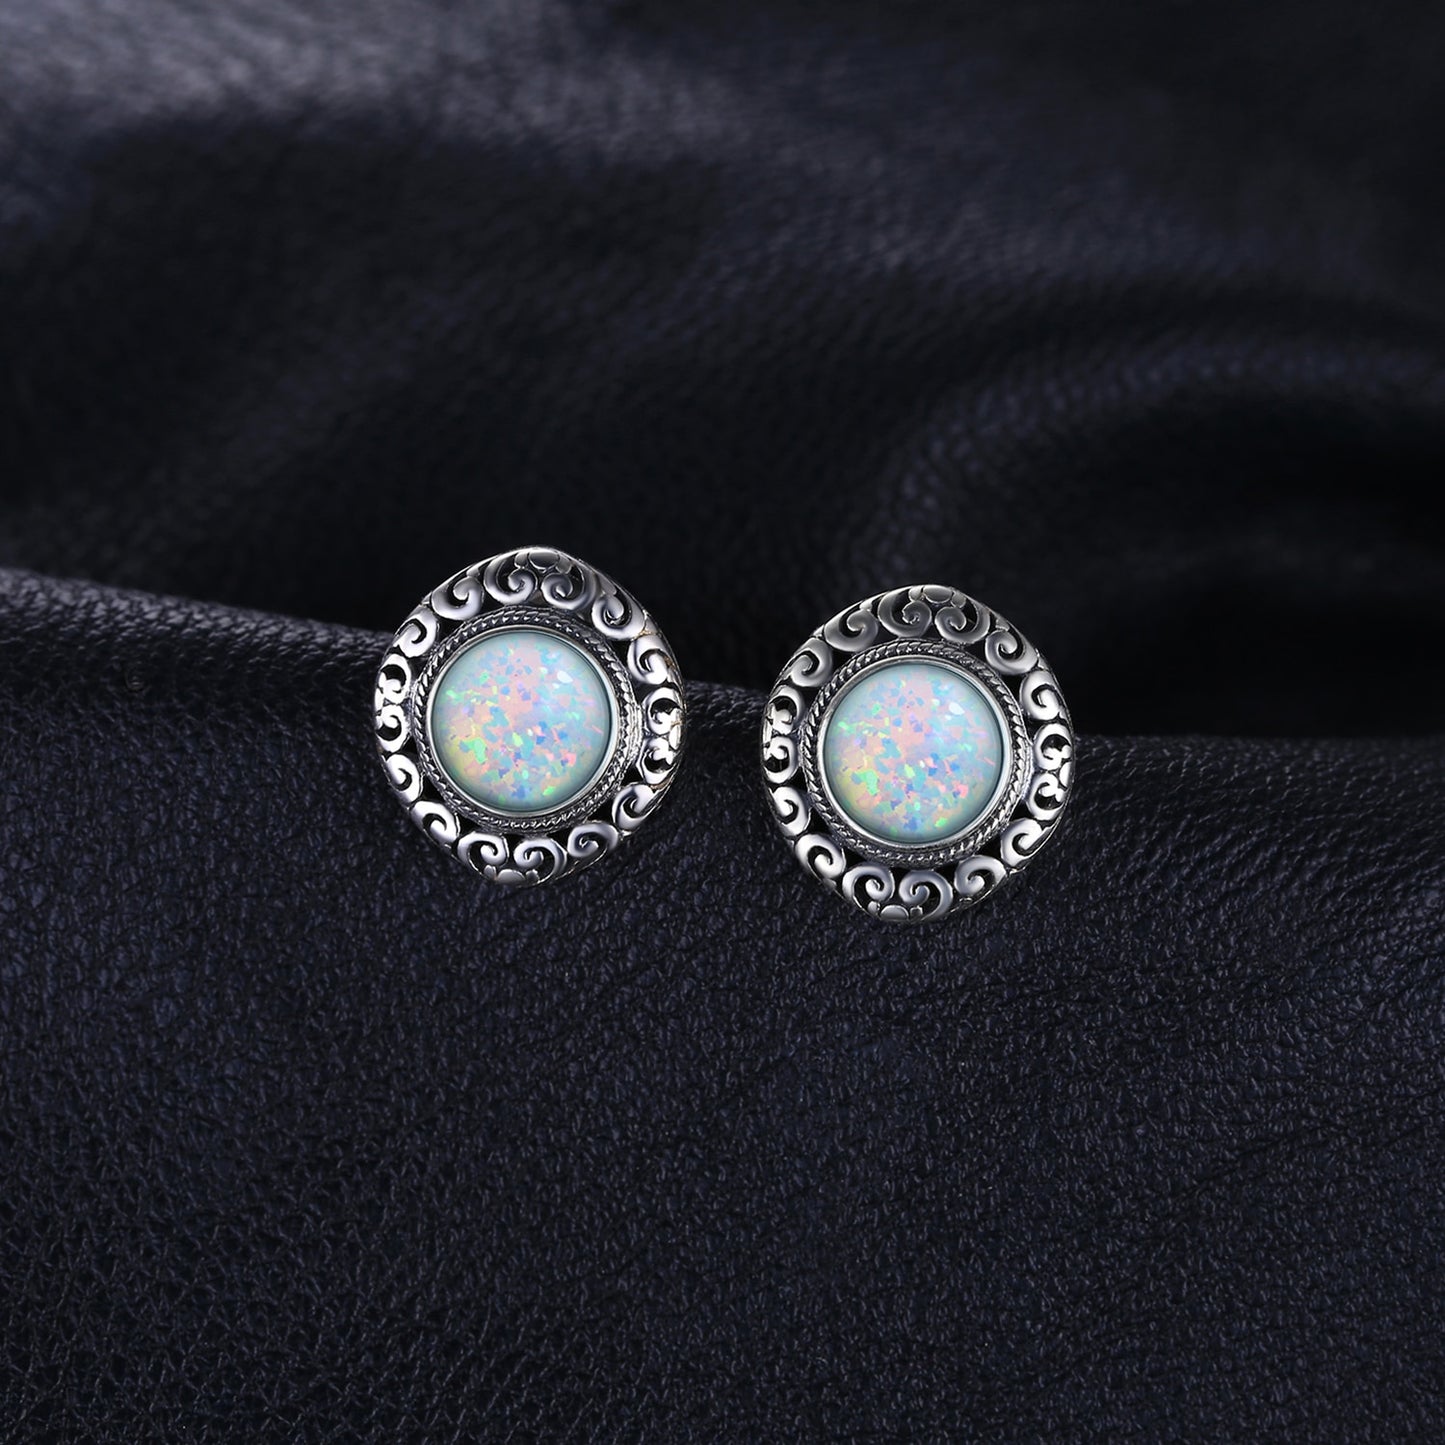 Jewelry Palace Vintage 2.5ct Cabochon Created Opal 925 Sterling Silver Stud Earrings for Women Hollow Heart Gemstone Earrings